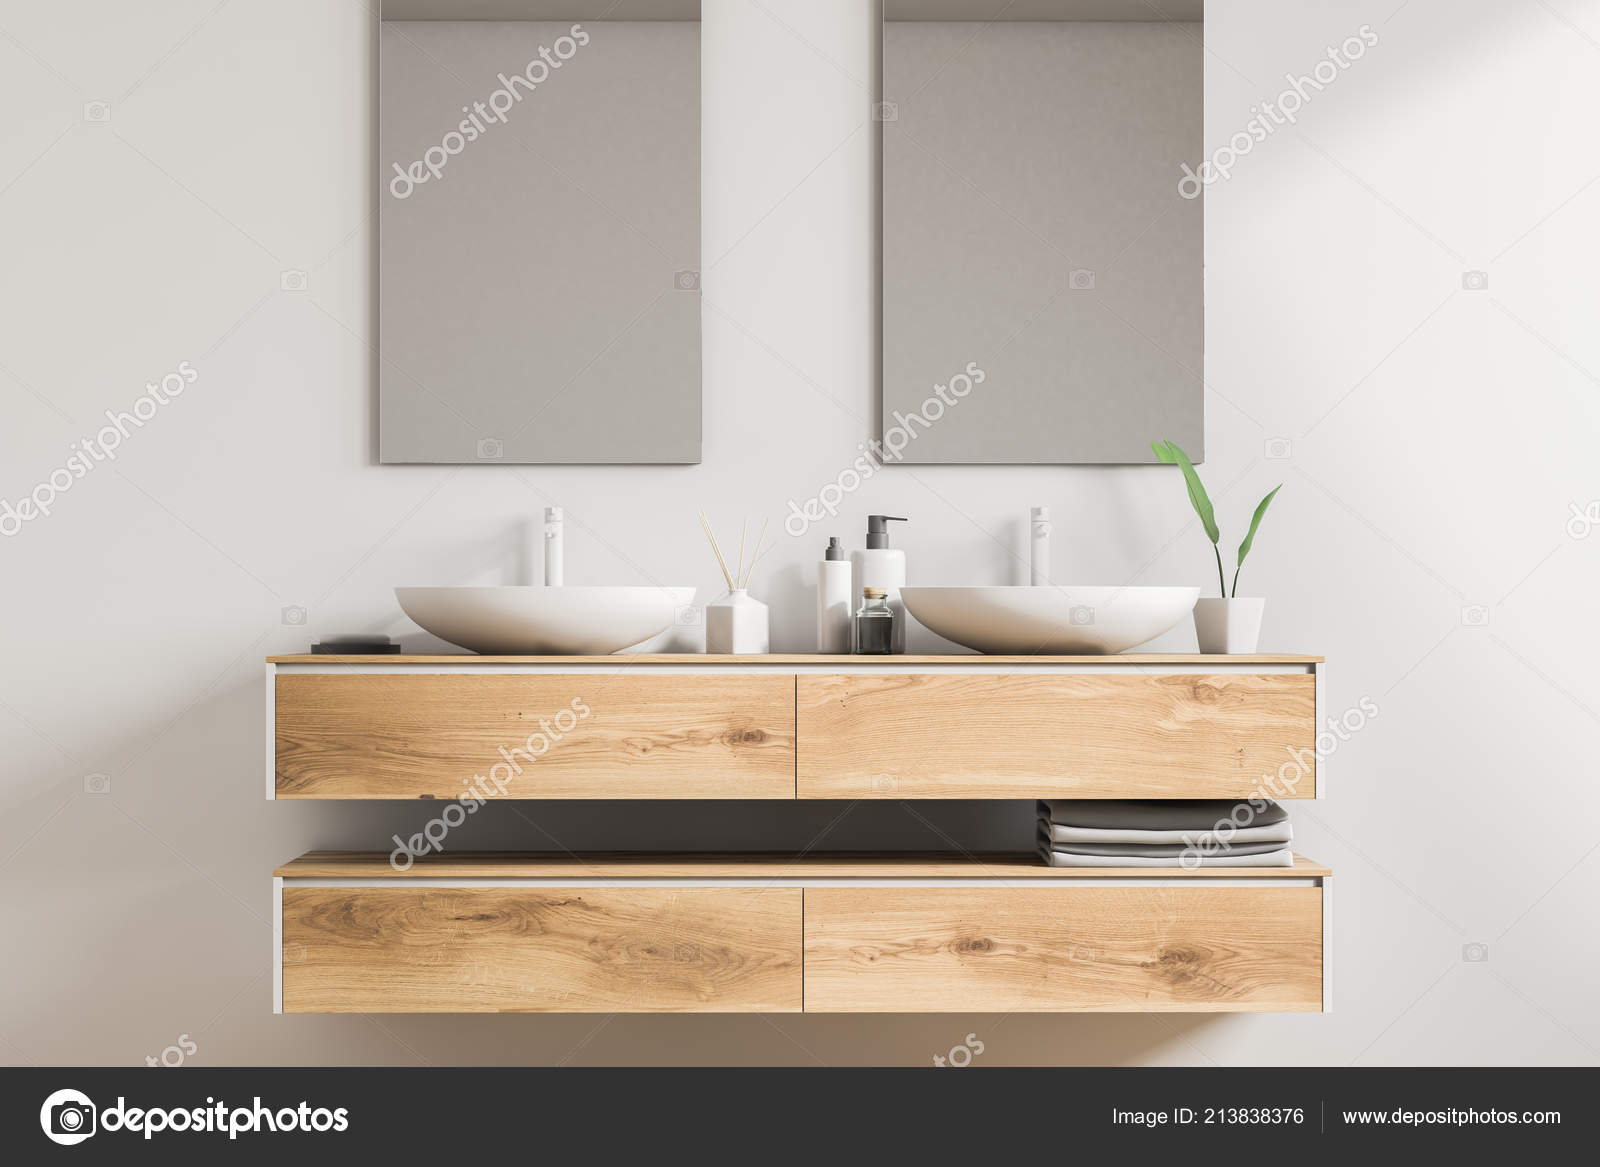 White Double Sink Standing Wooden, Wooden Vanity Unit Sink